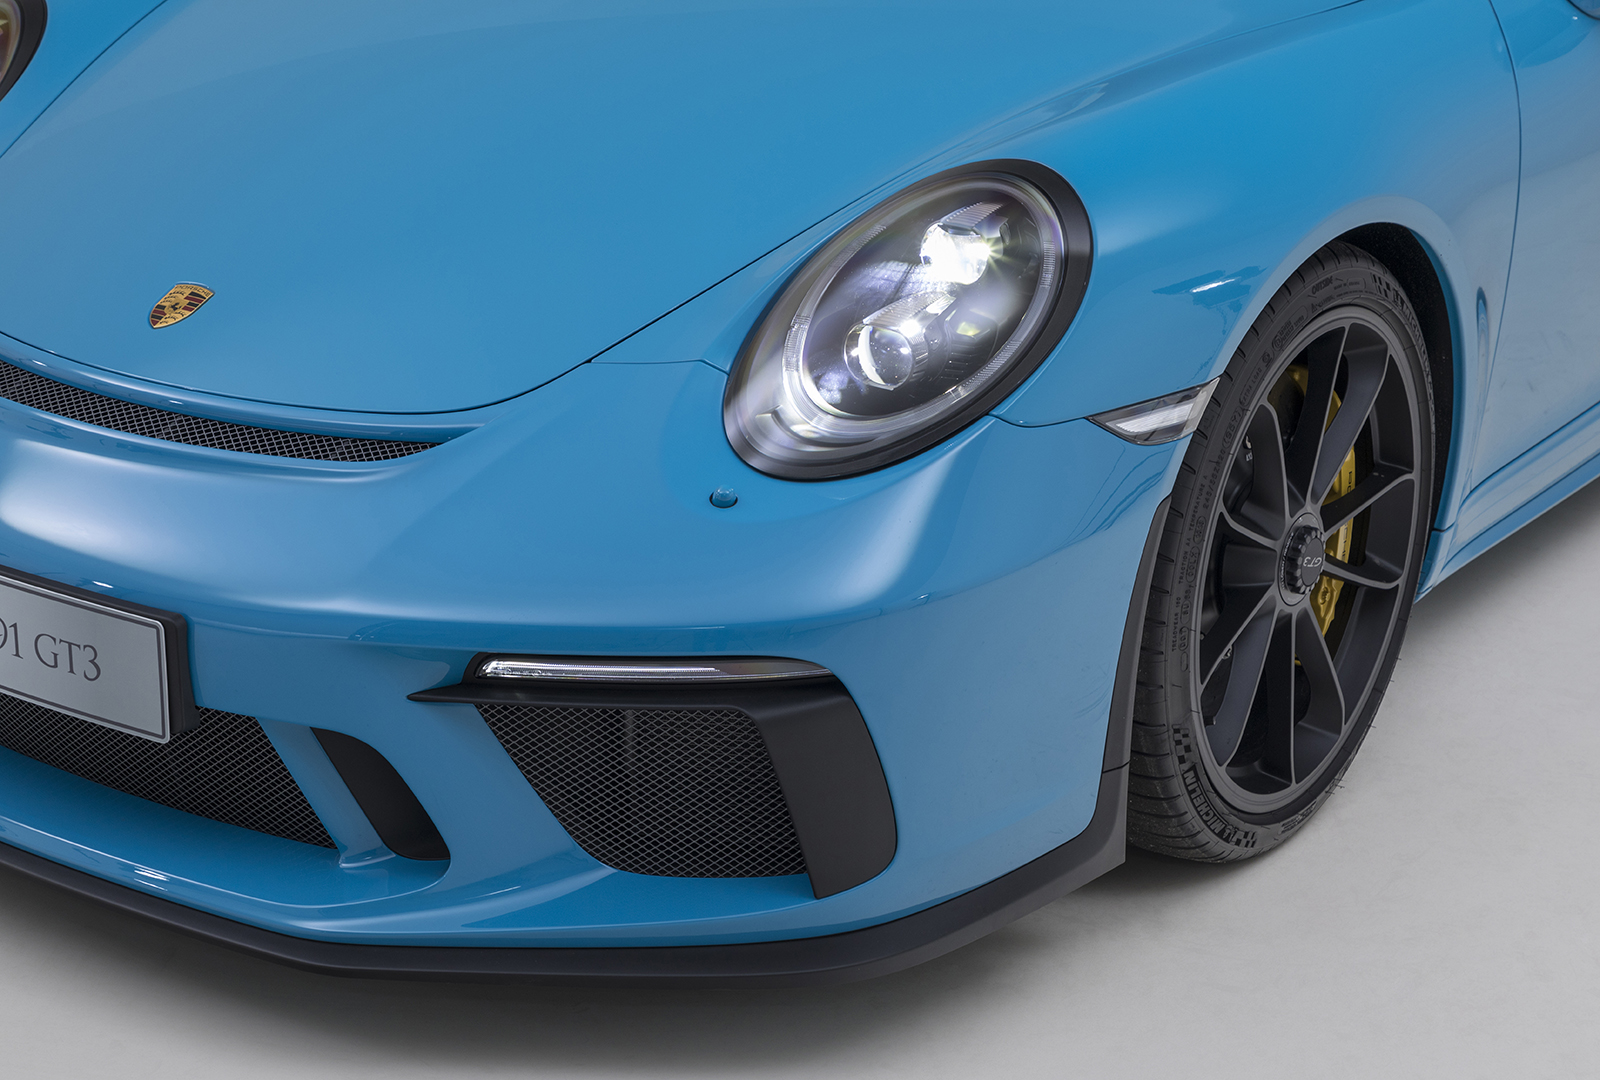 2016 Porsche 911 GT3 RS Photos and Info – News – Car and Driver